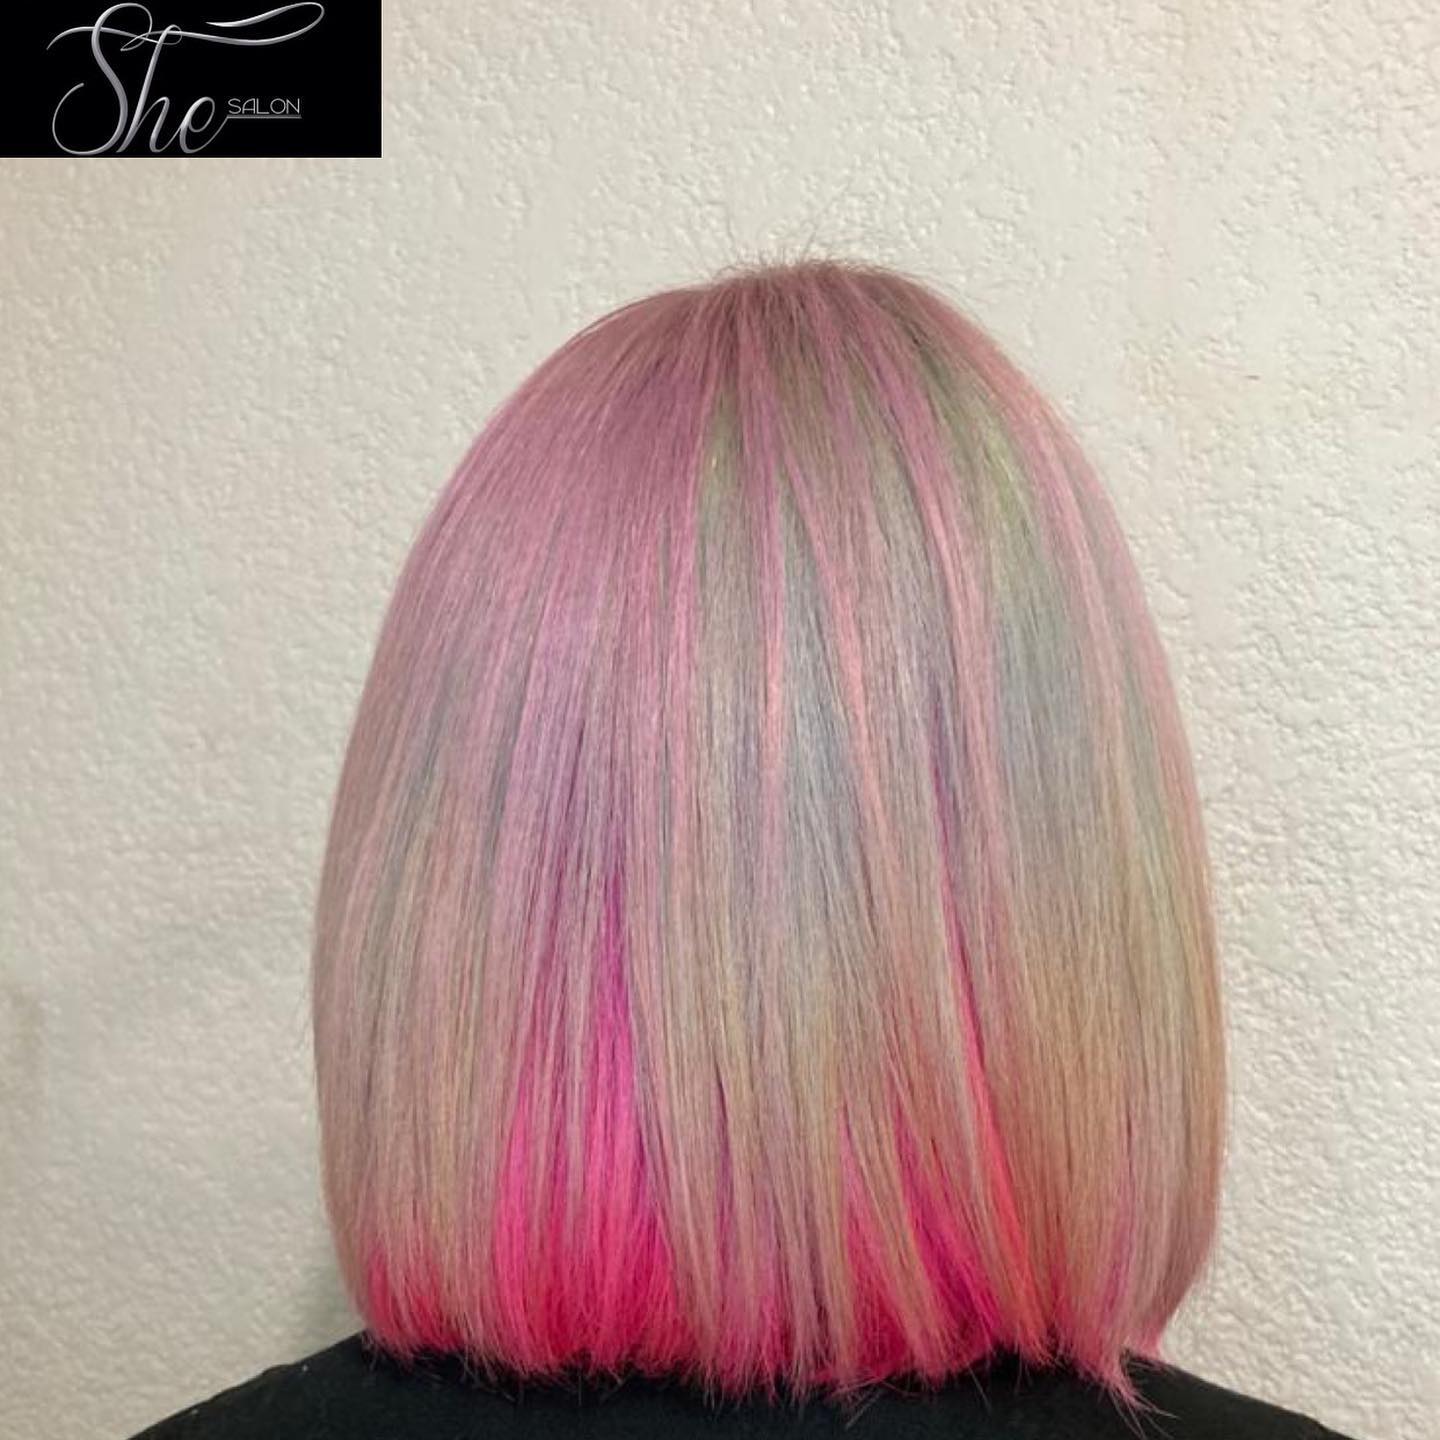 153906690 116570827090668 6144371245760770087 n - Ombré hair rosa: 60 inspirações, trends